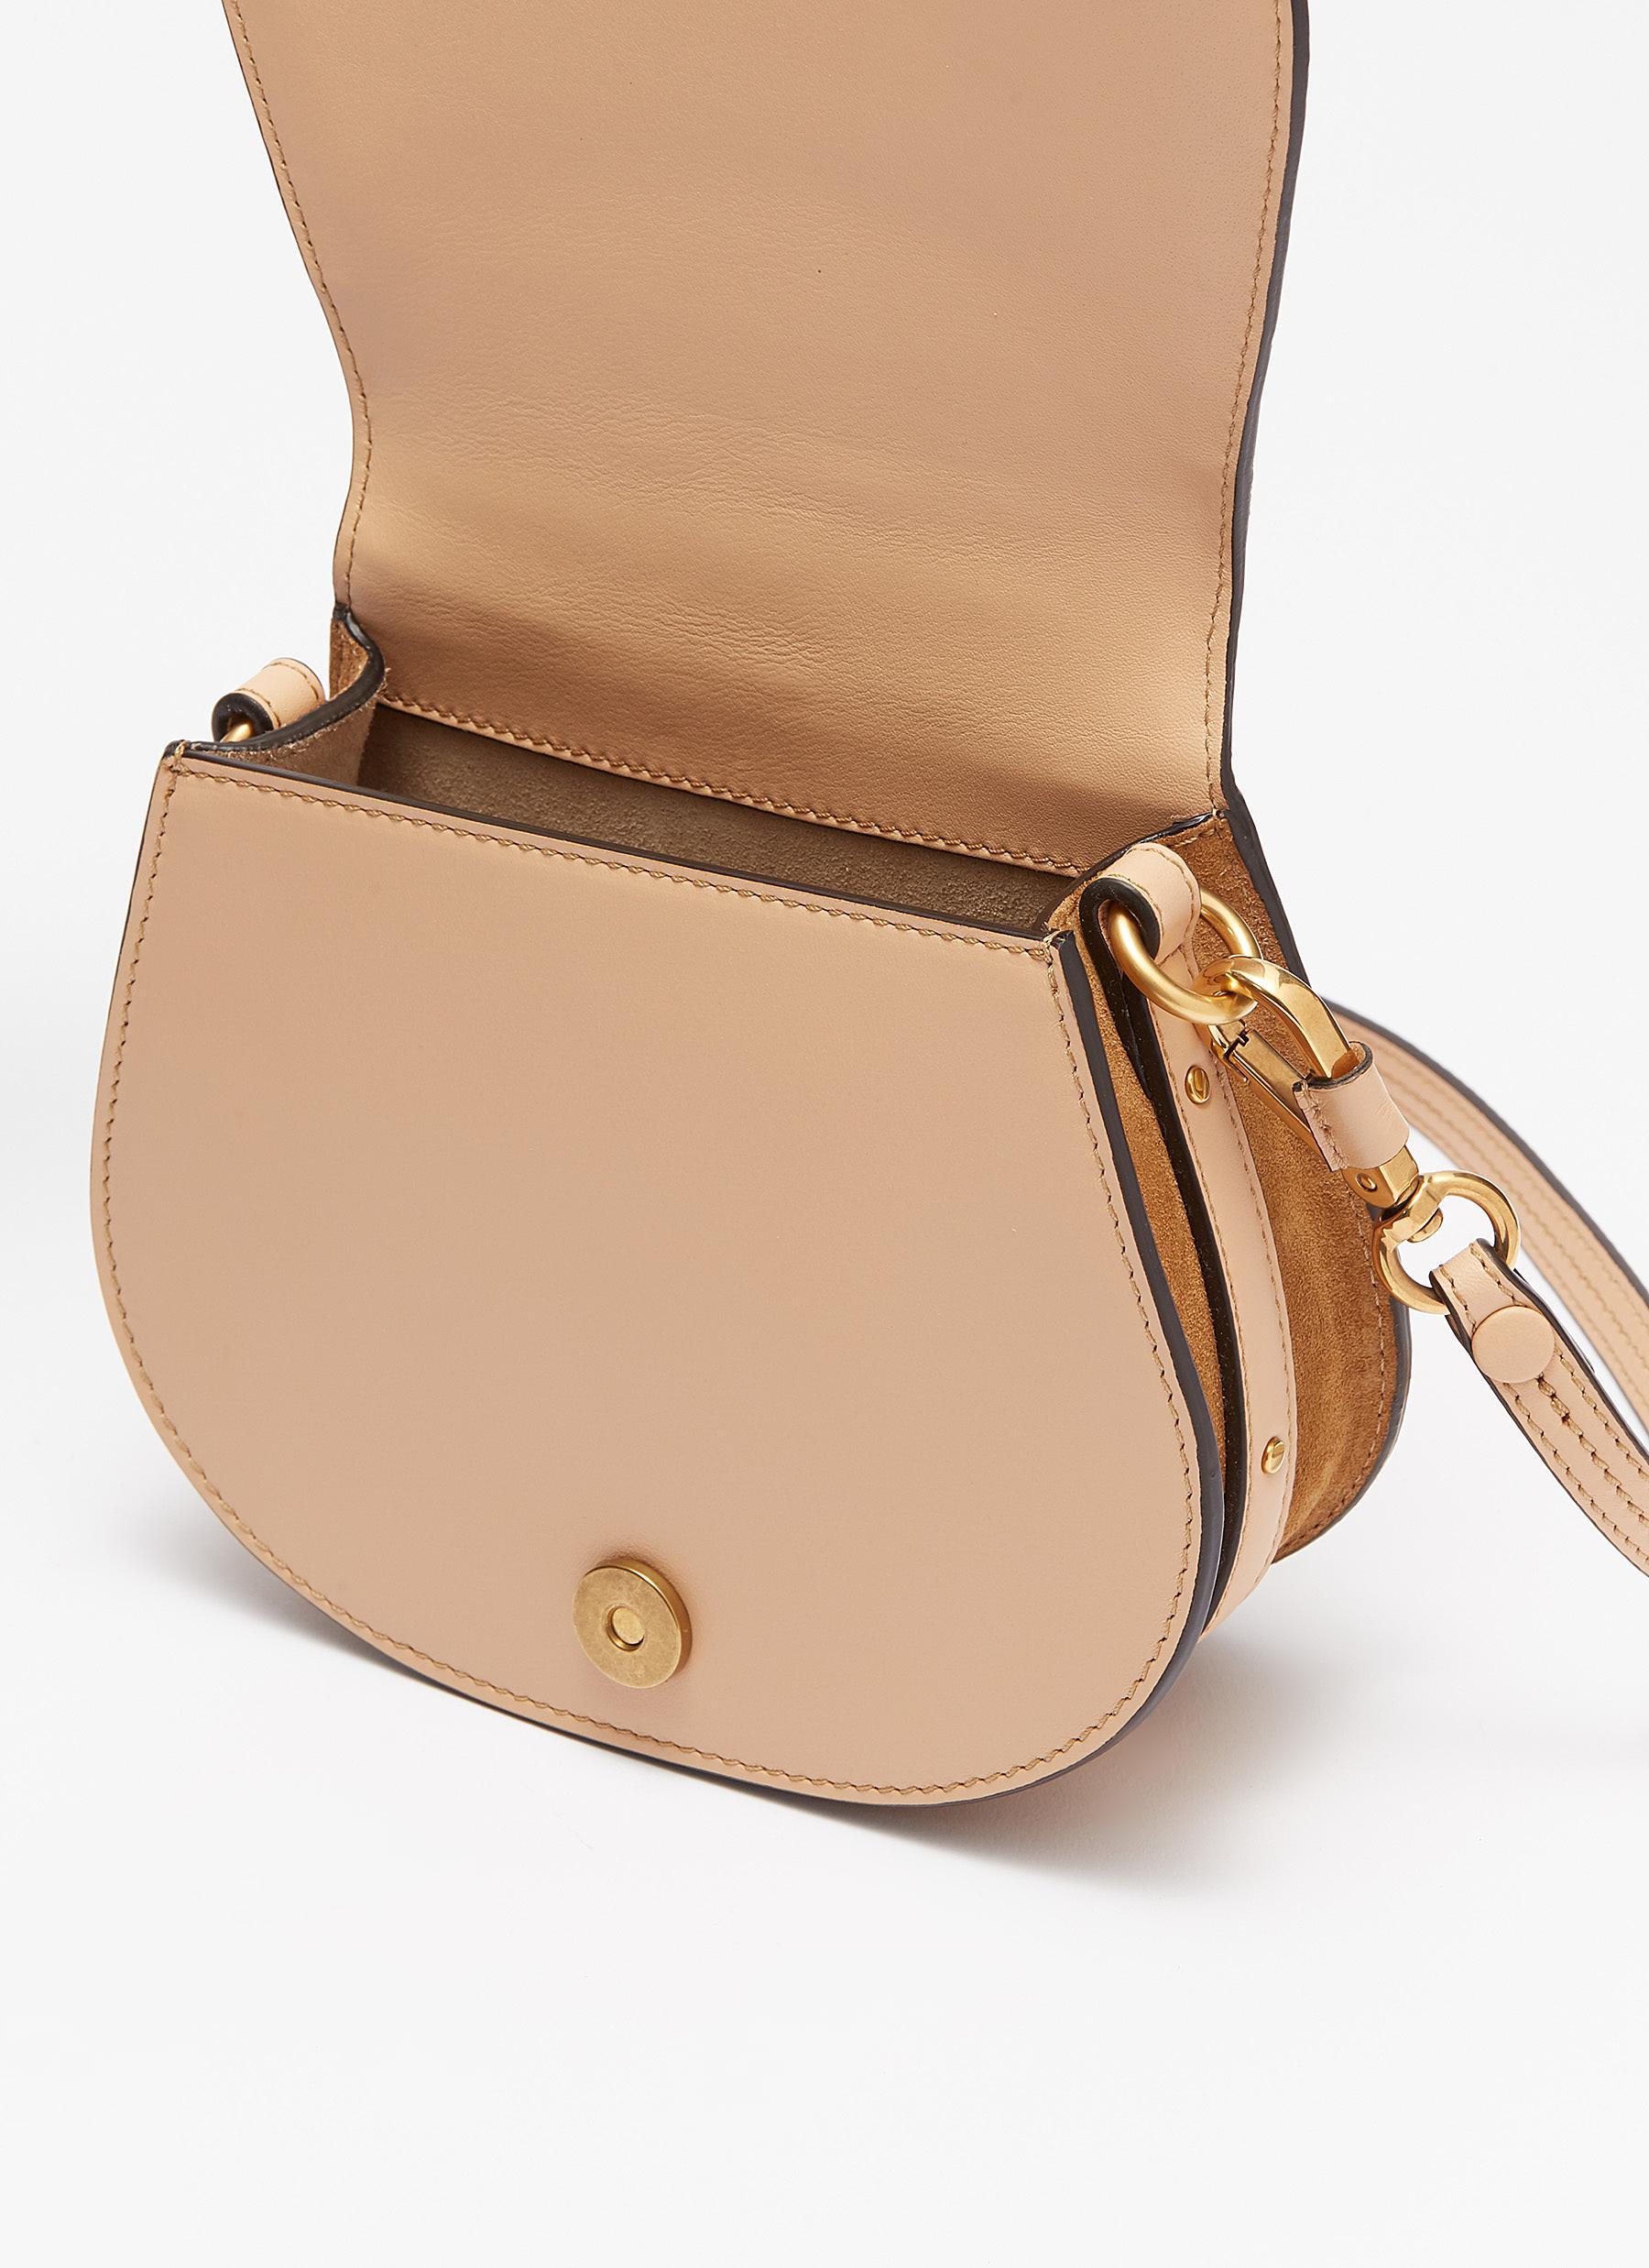 Chloe Nile Leather Crossbody Bag